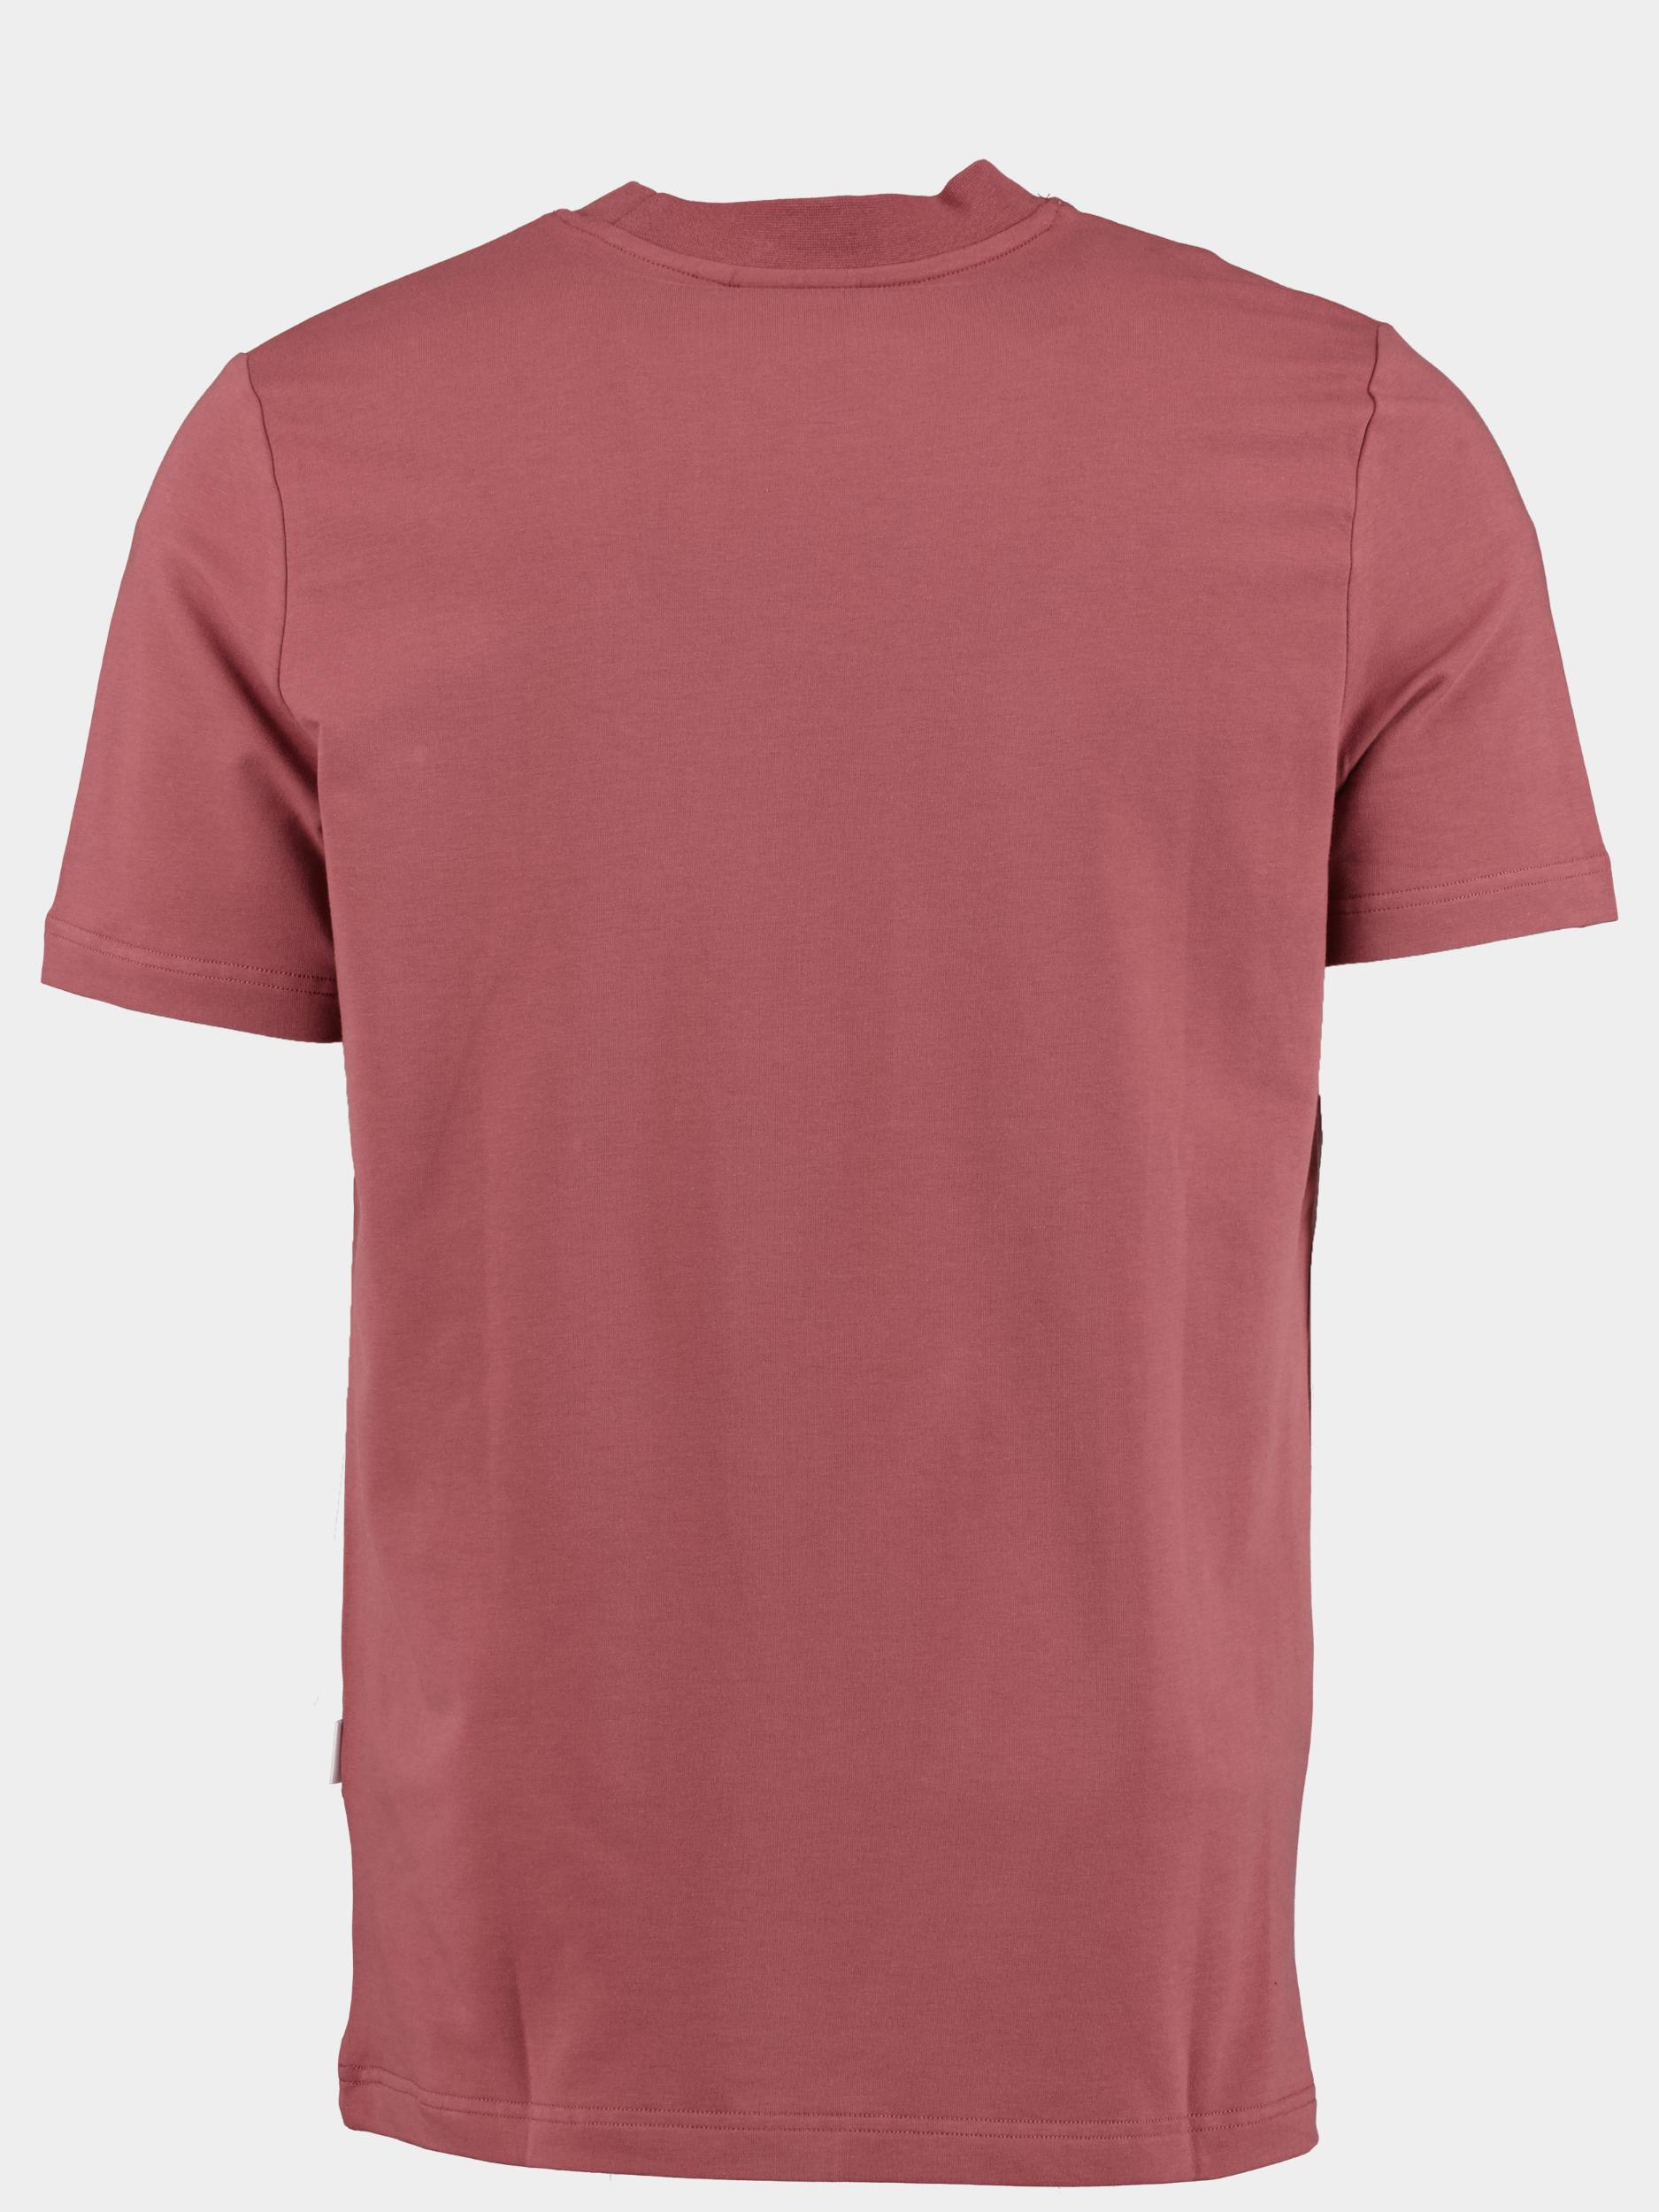 Supply & Co. T-shirt korte mouw Paars Lungo Tee With Chestlogo 24108LU16/687 dark mauve